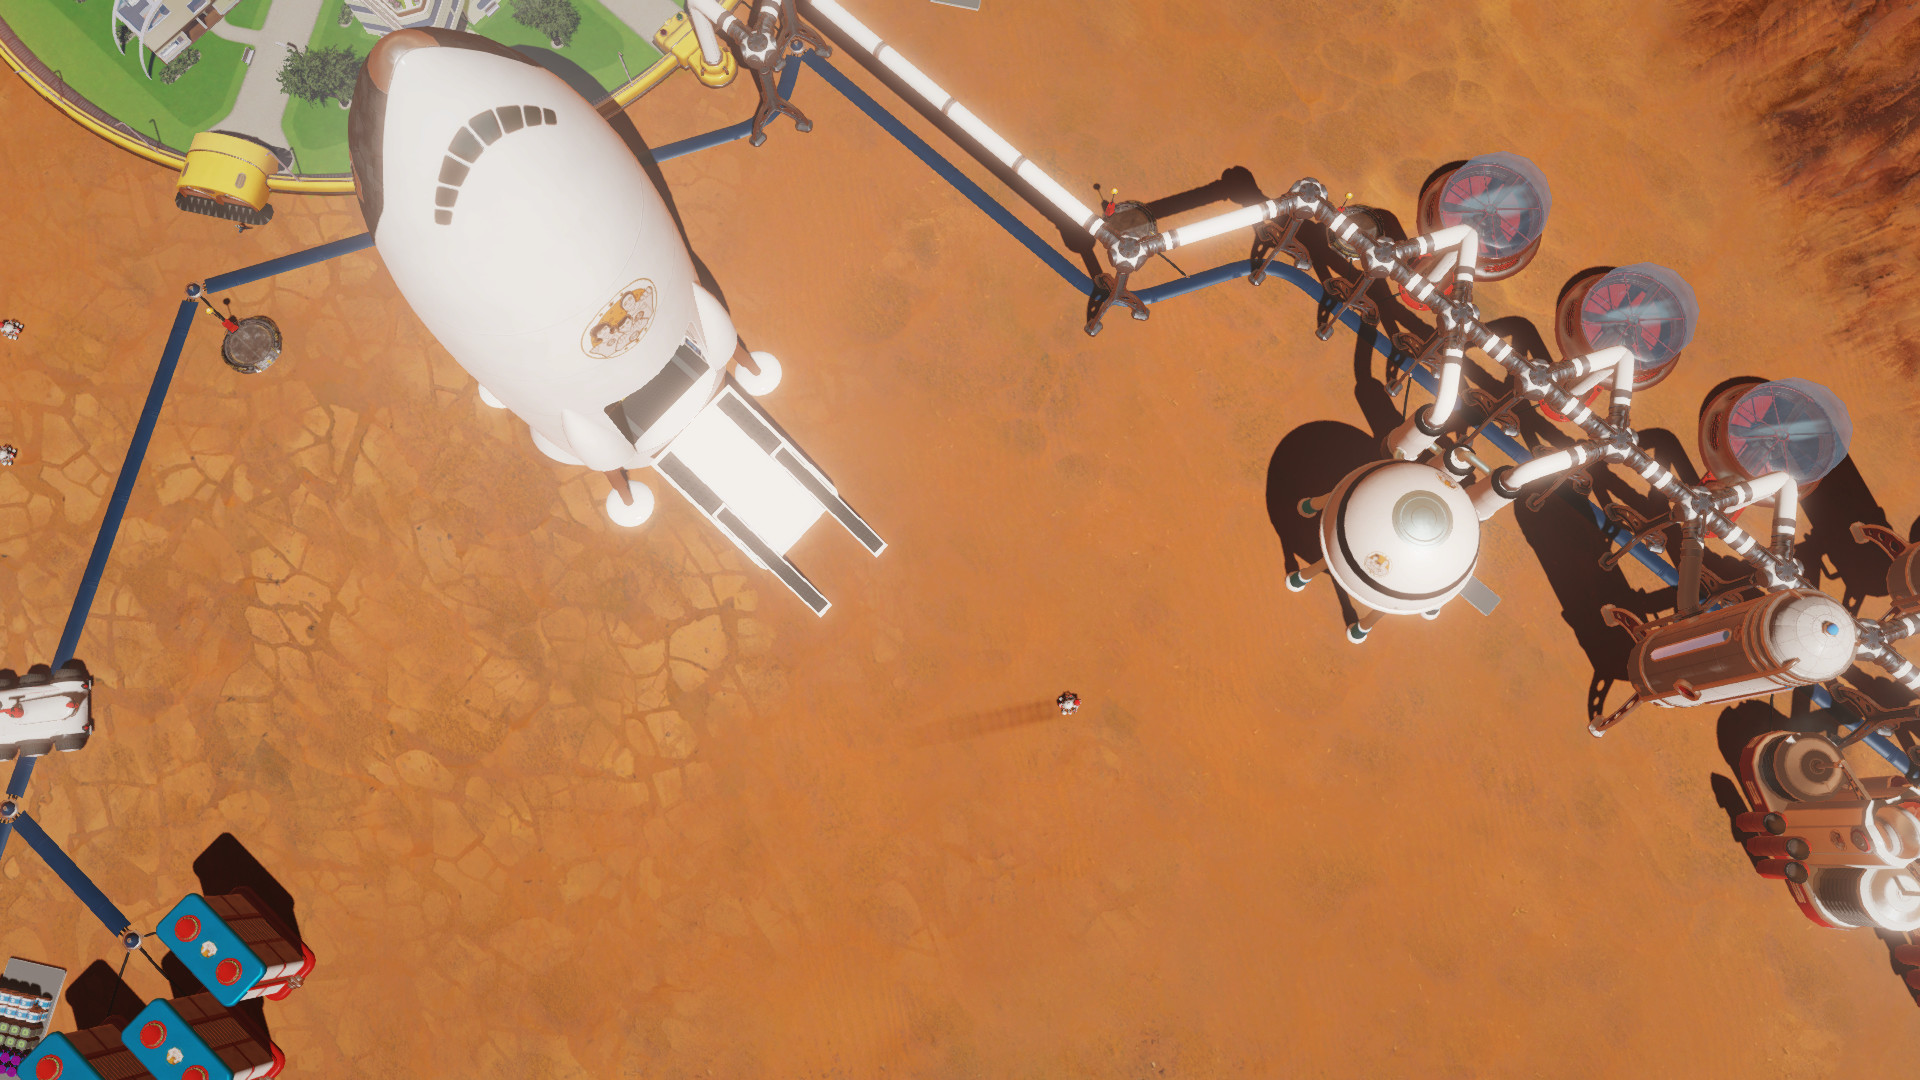 Jogo PS4 Surviving Mars